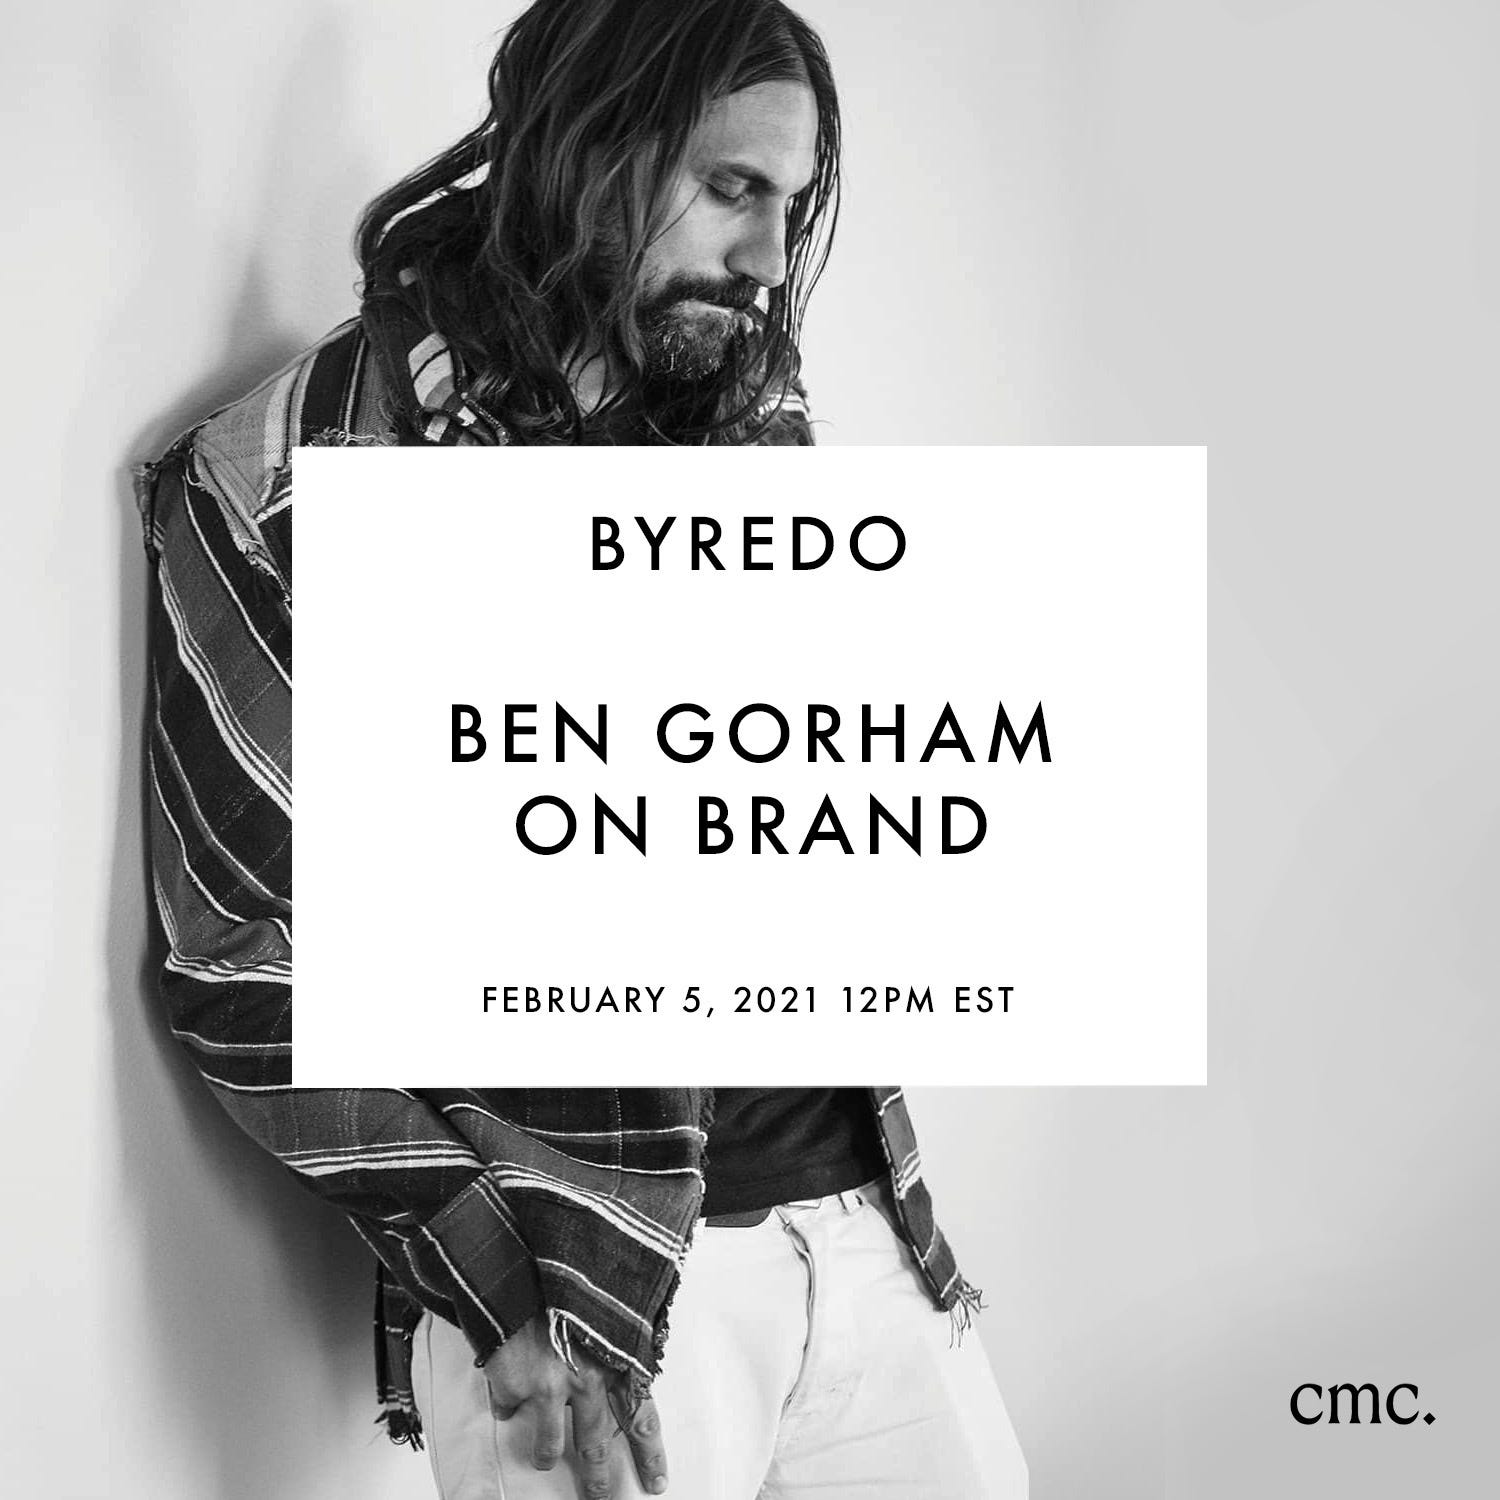 Visionaries 2017: Ben Gorham, founder of Byredo